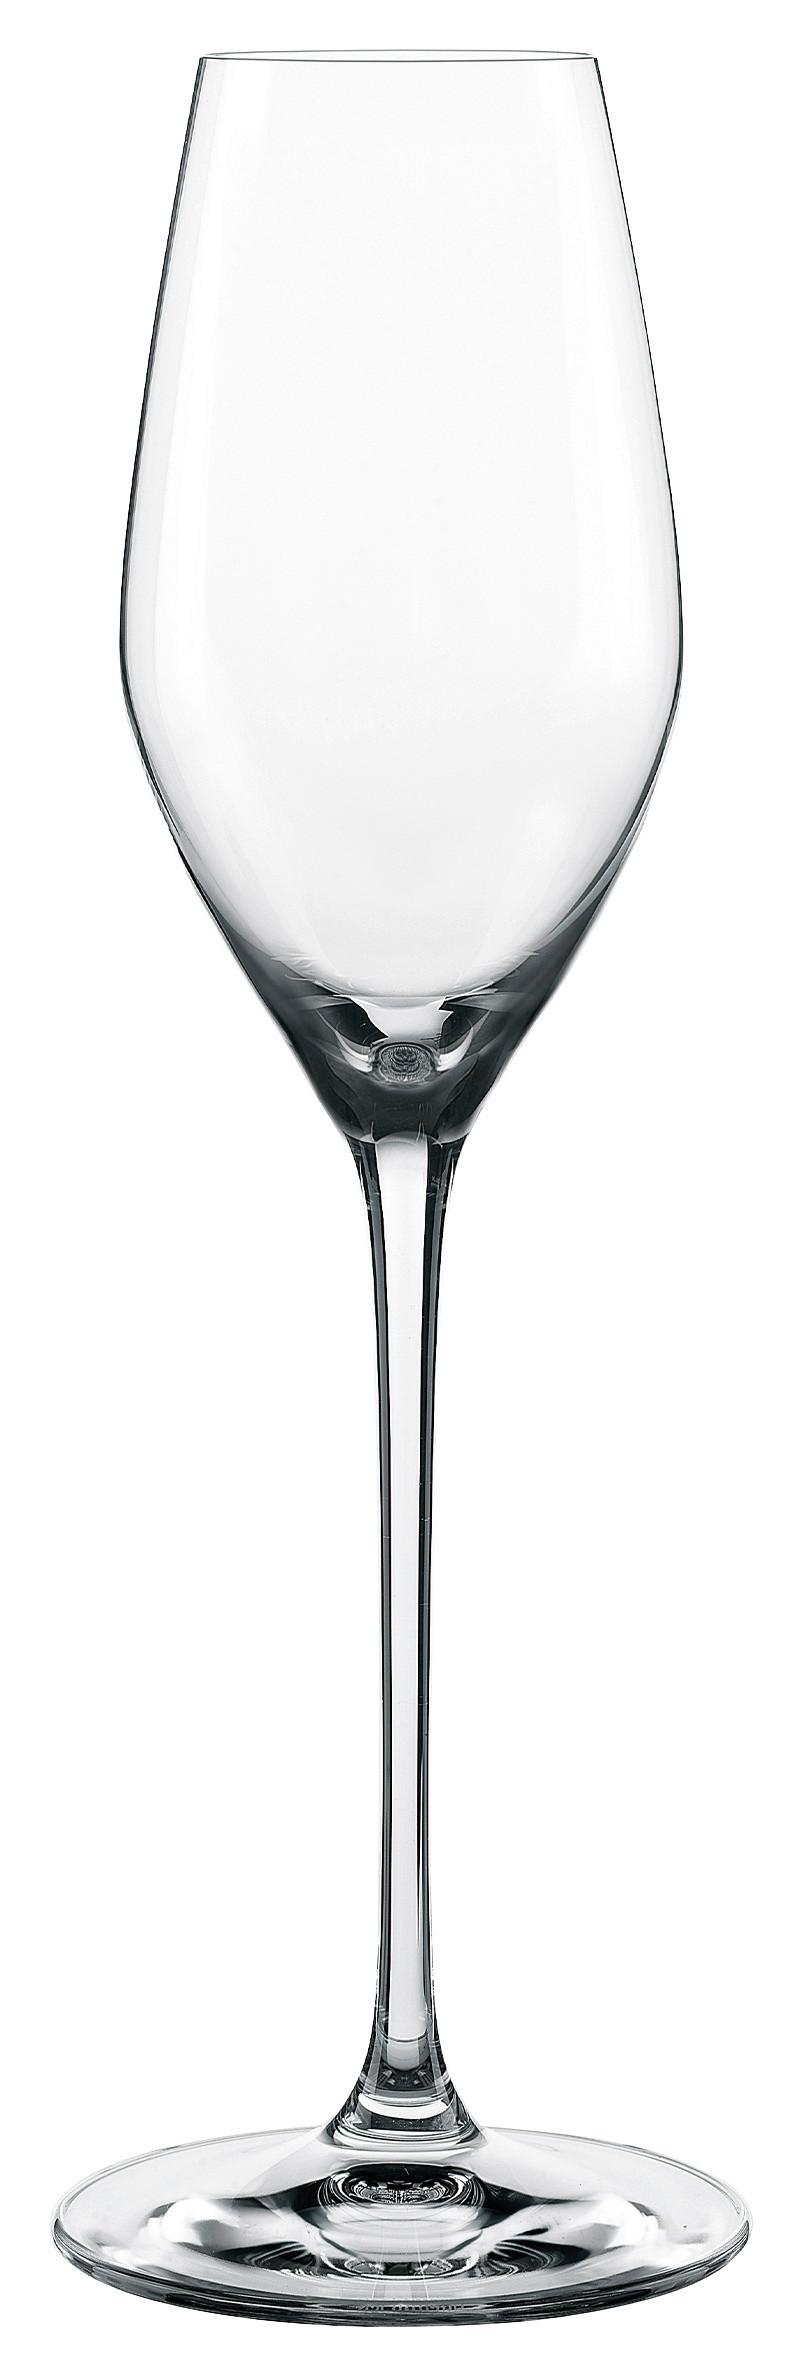 Sektglas Topline ca. 300ml - Klar, KONVENTIONELL, Glas (8,6/26,5/8,6cm) - Spiegelau